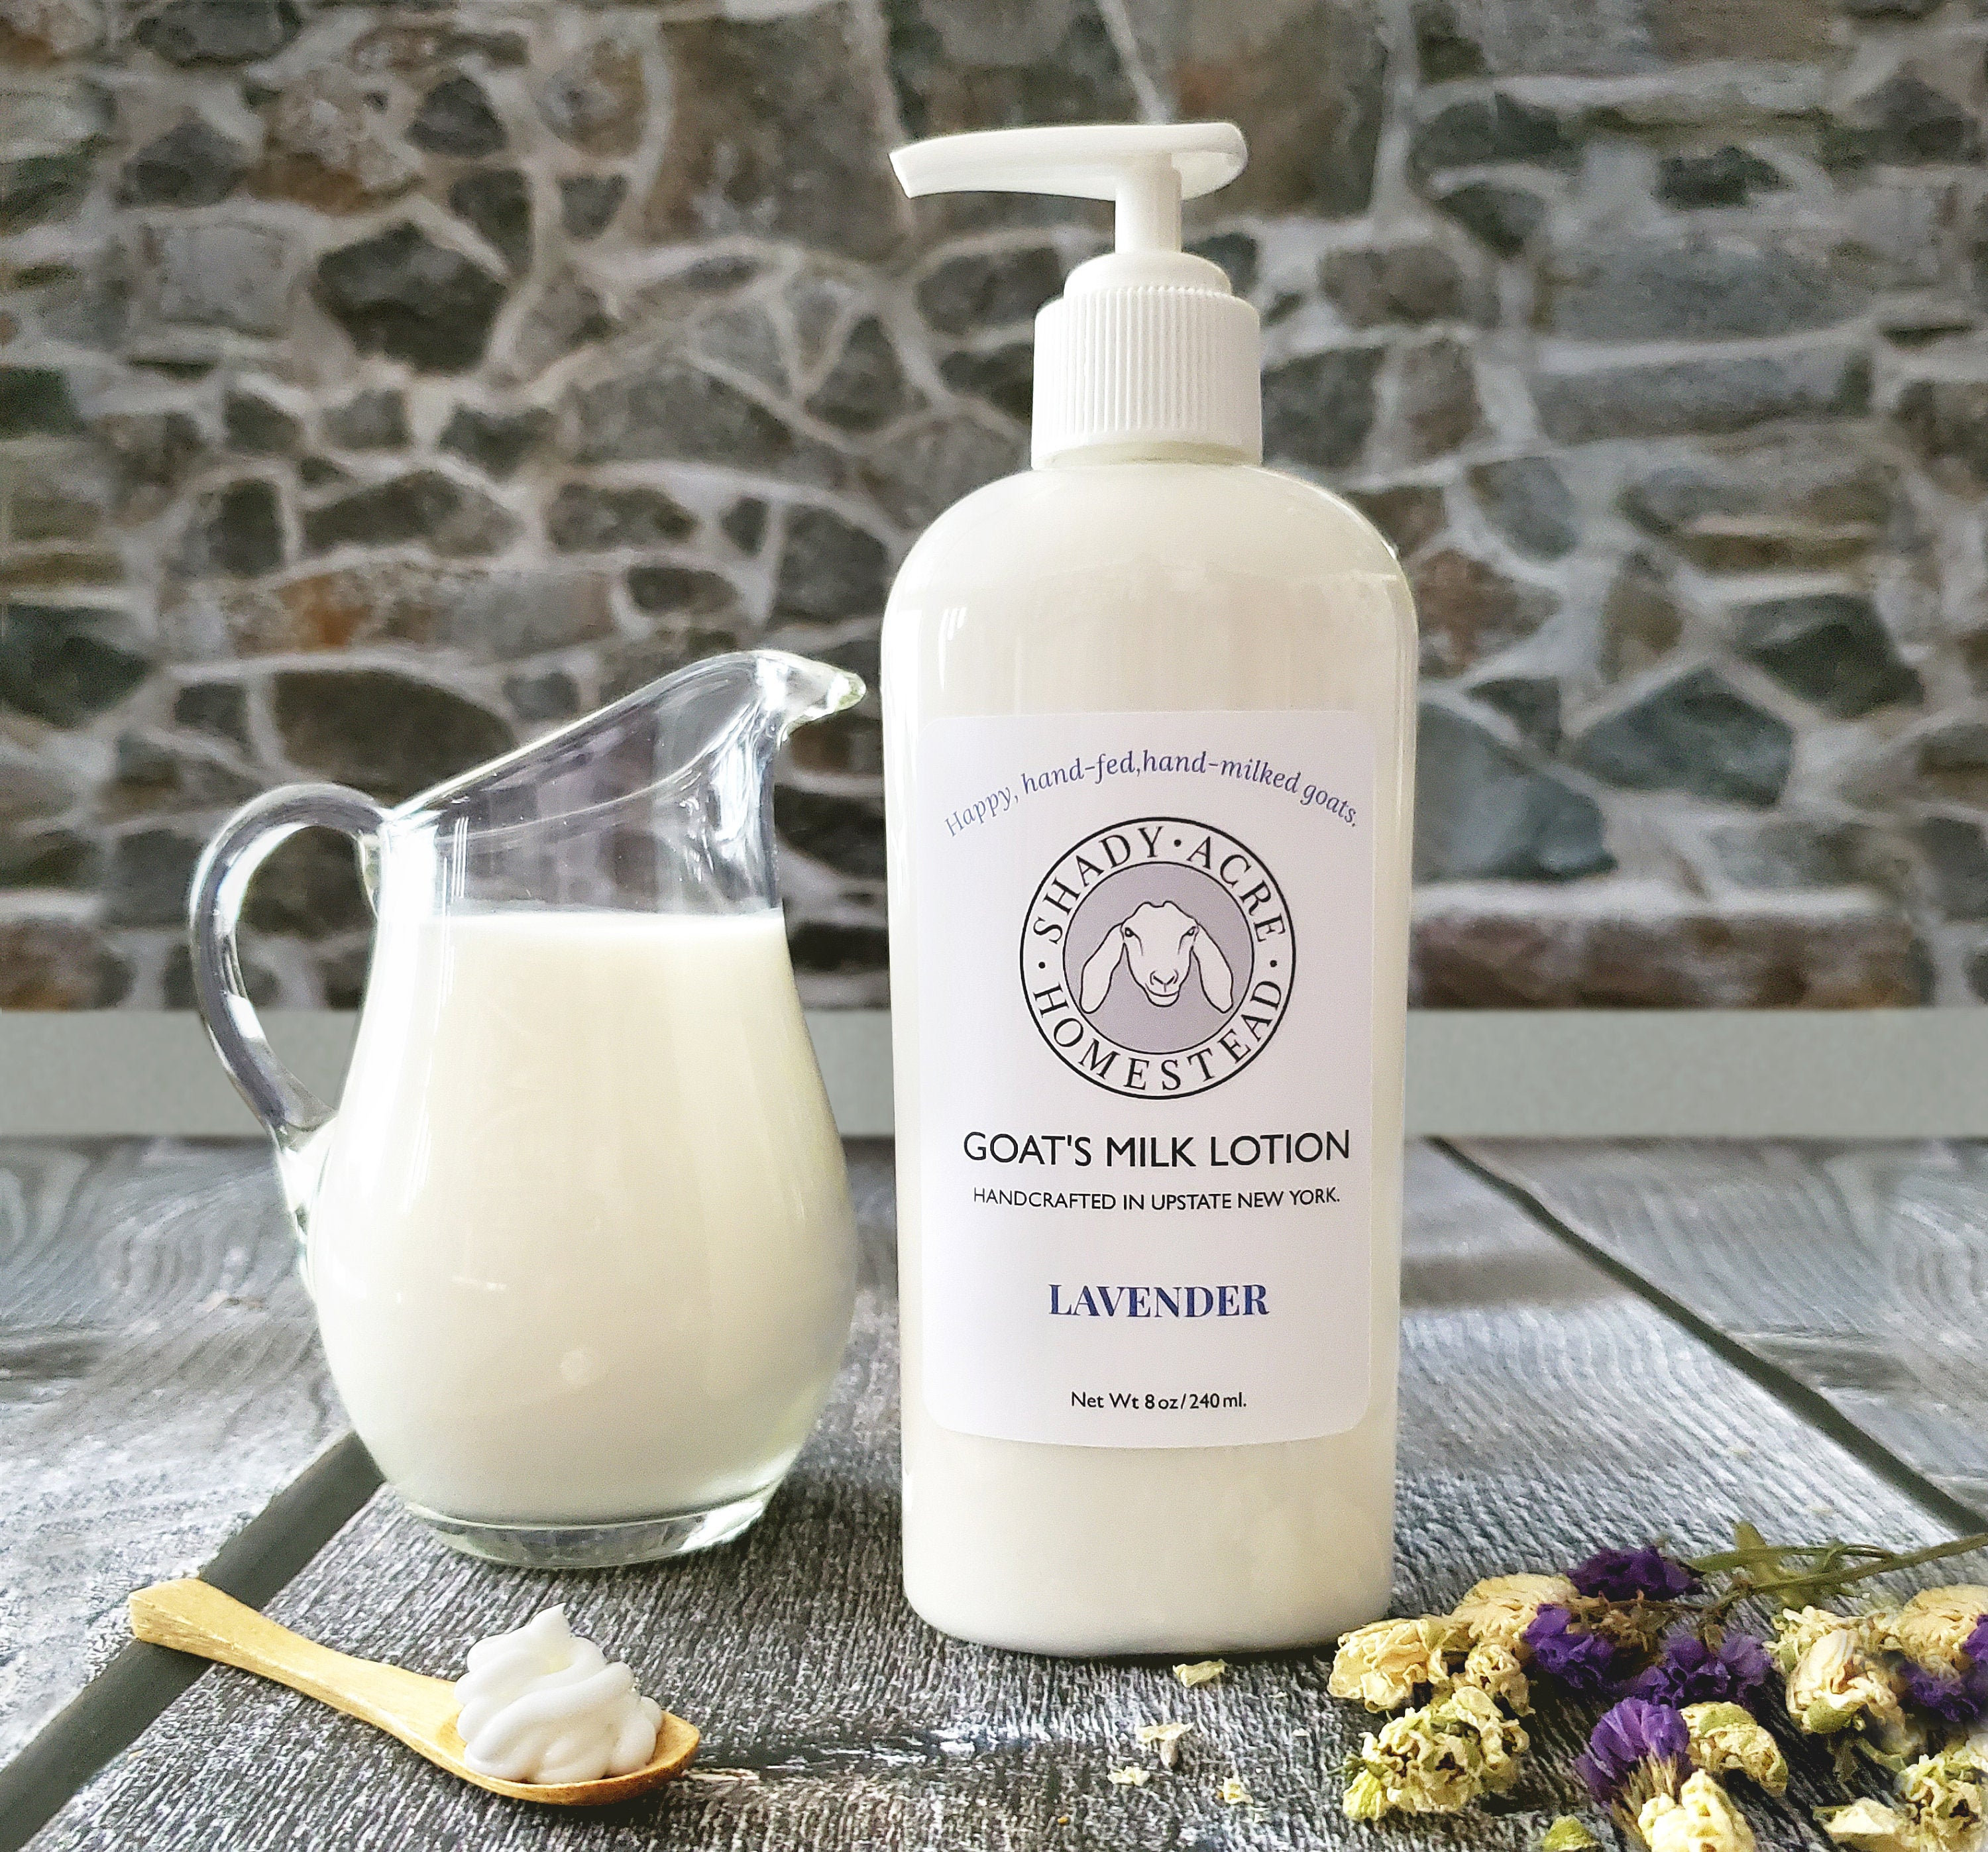 Goat's Milk Soap Farm Fresh Organic Natural – Grandmas All Natural Soap